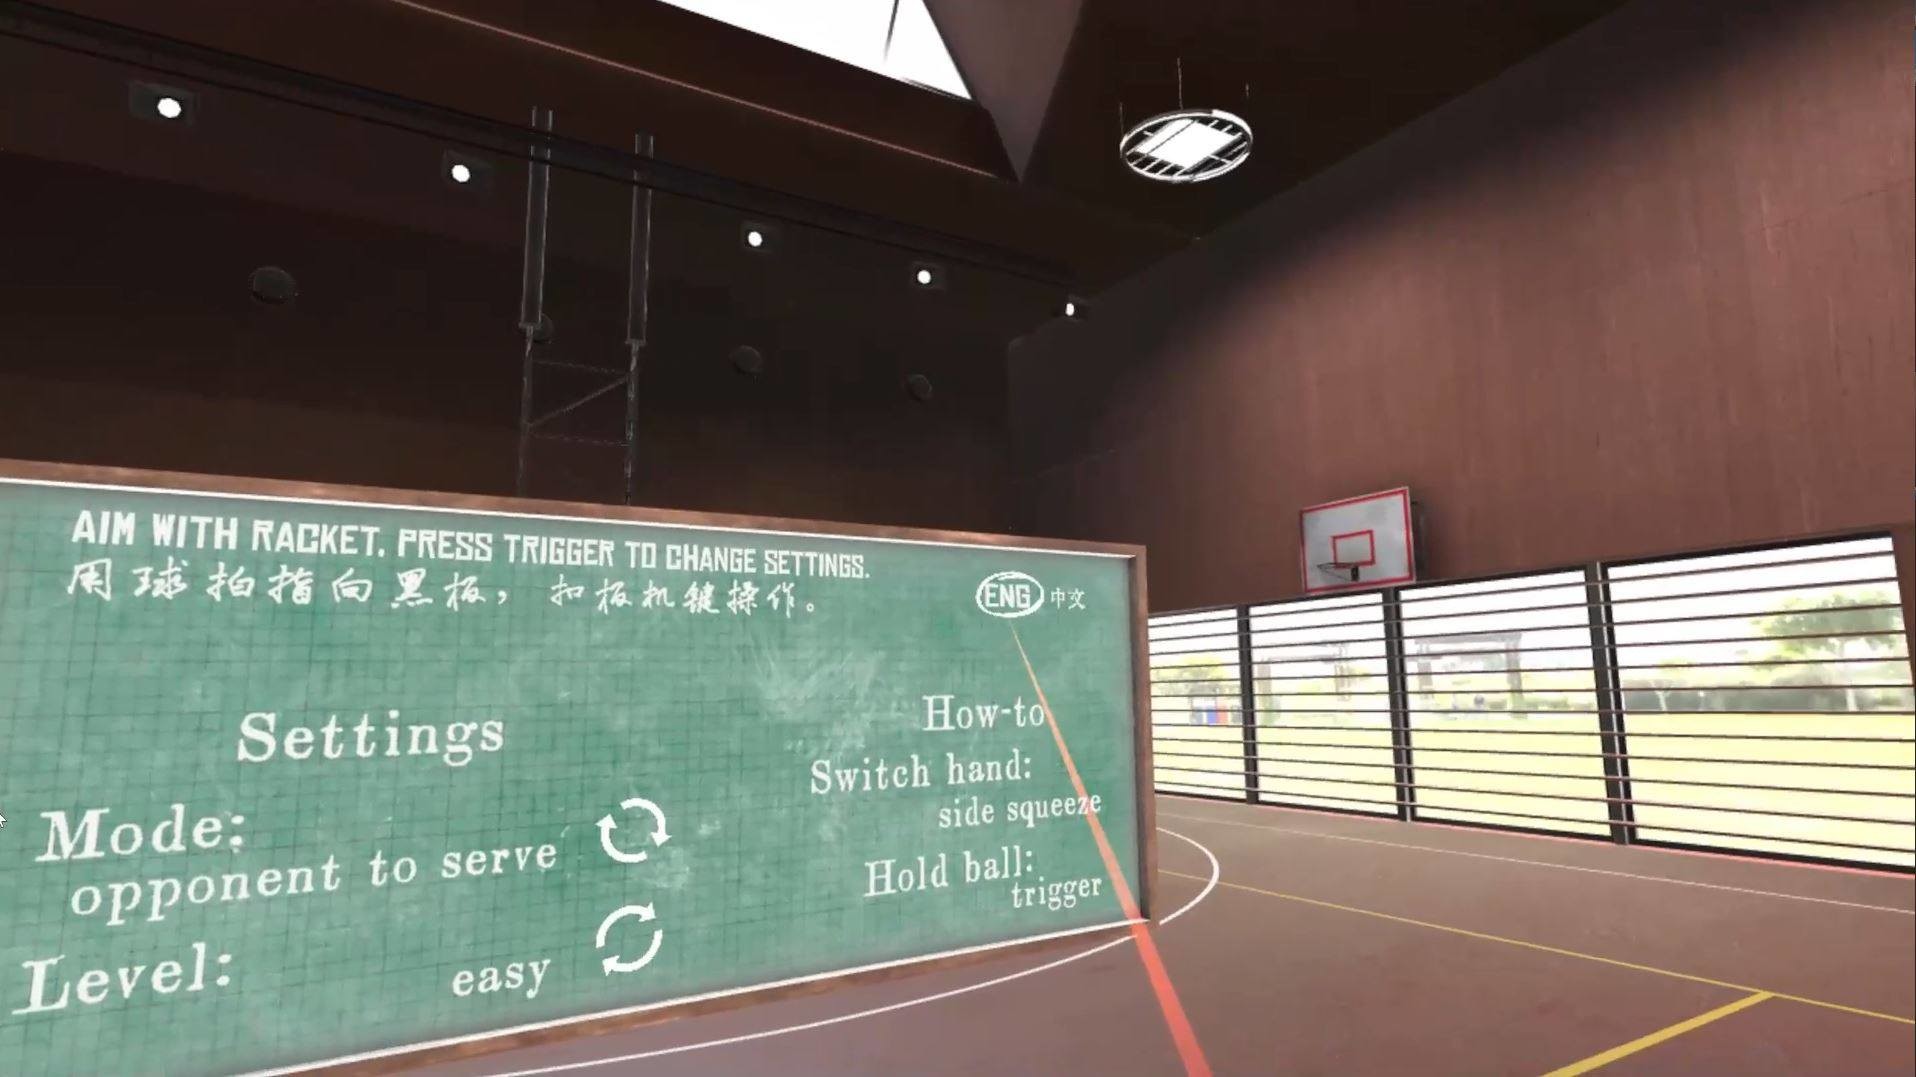 Pro Table Tennis VR screenshot